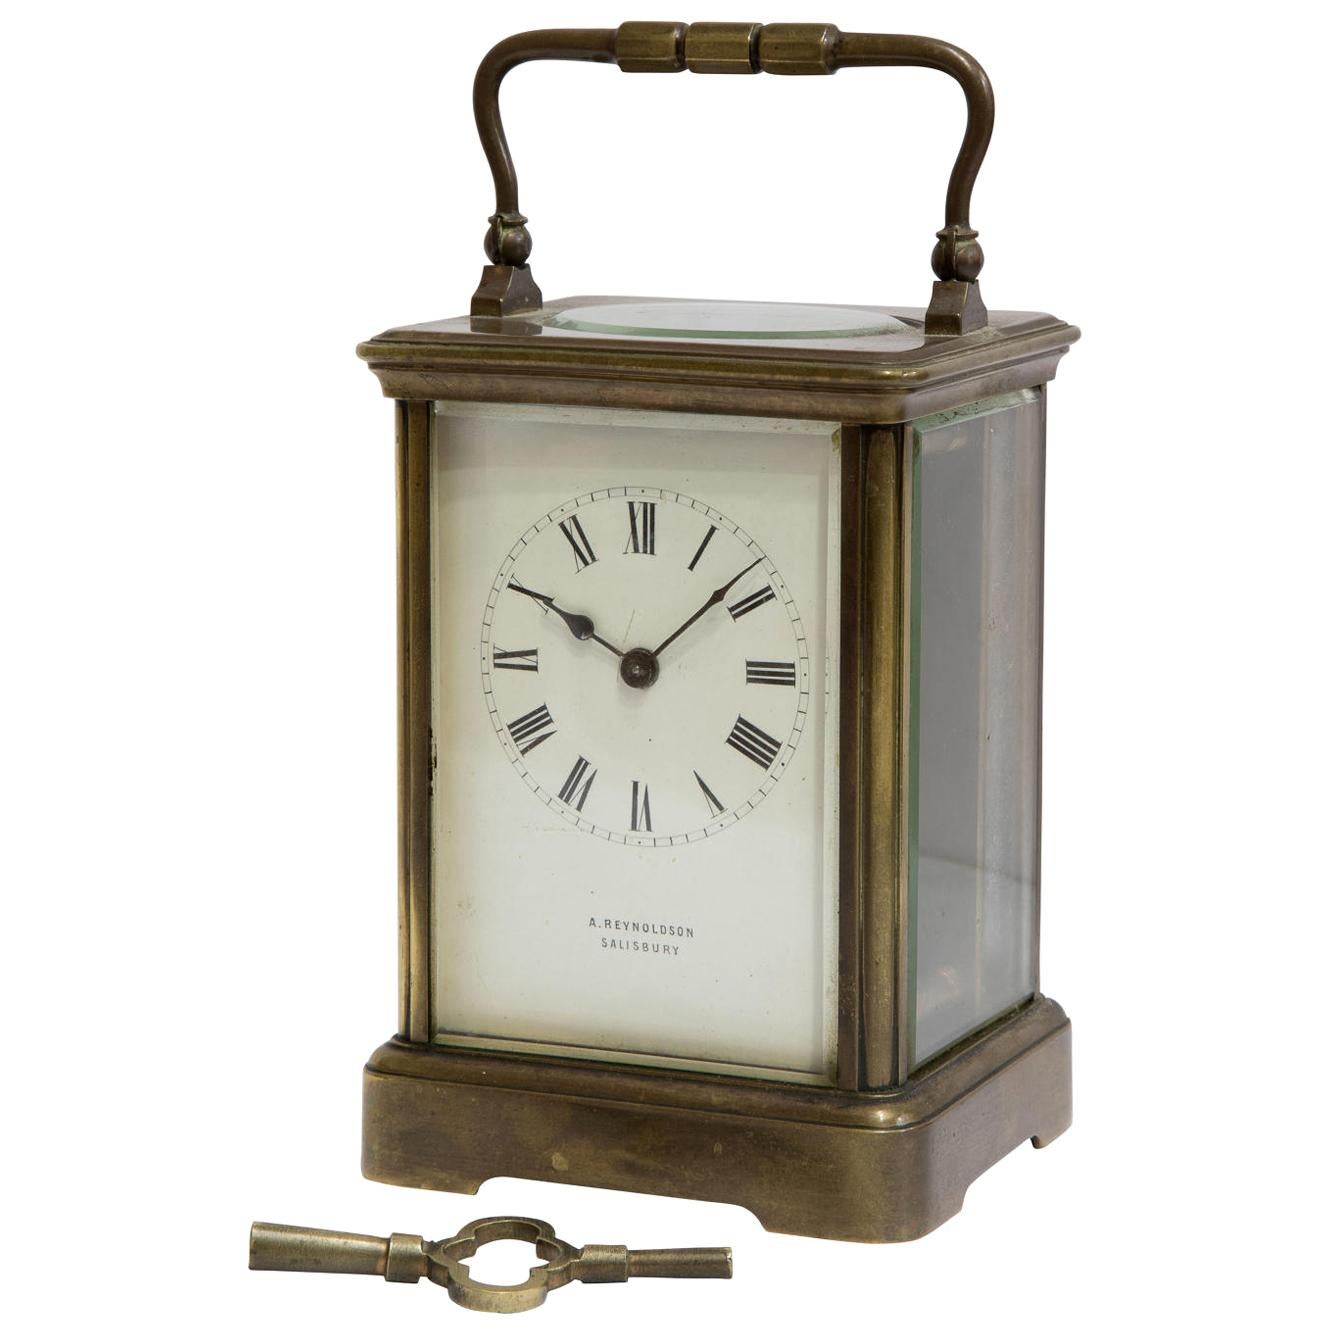 French Carriage Clock Timepiece with Enamel Dial by A. Reynoldson Salisbury